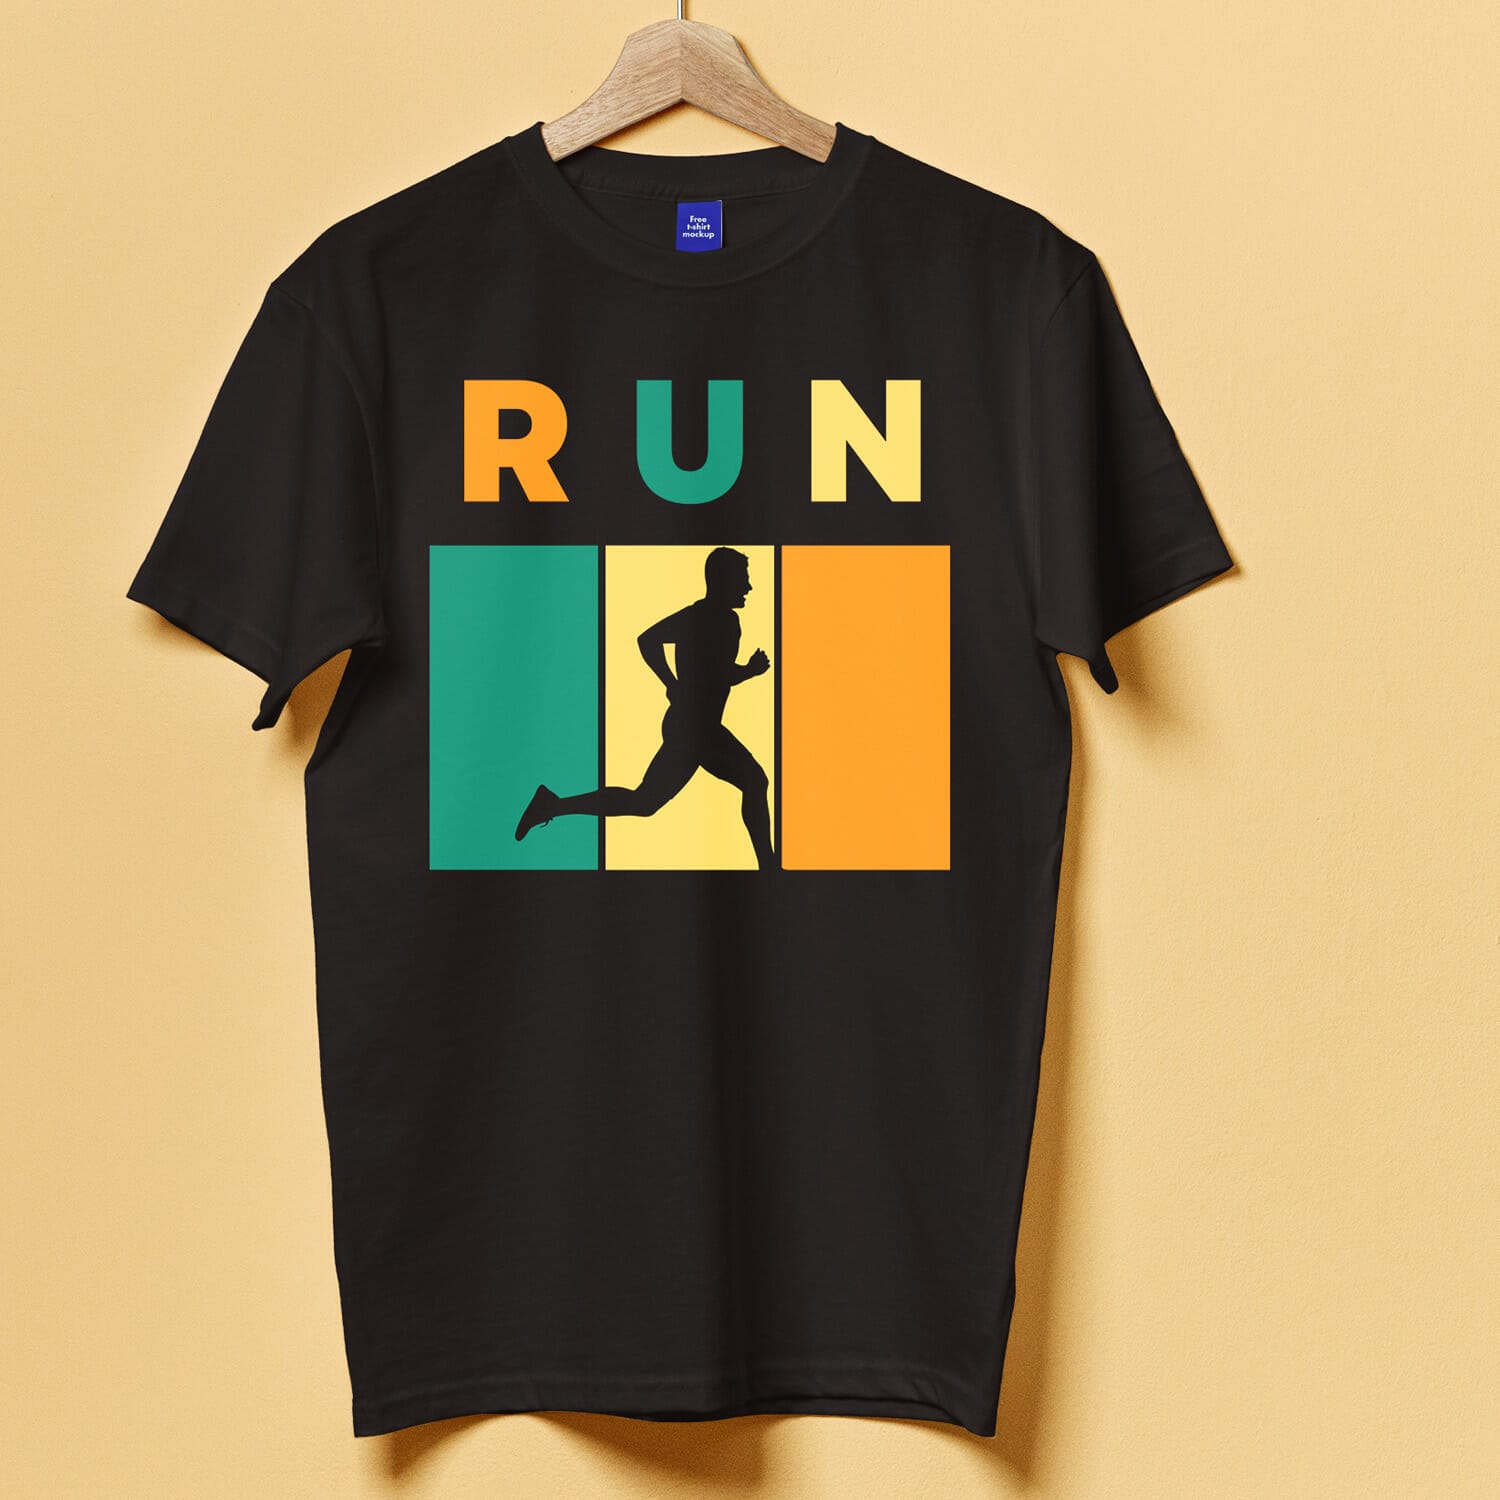 Retro Vintage T-shirt Design For Running